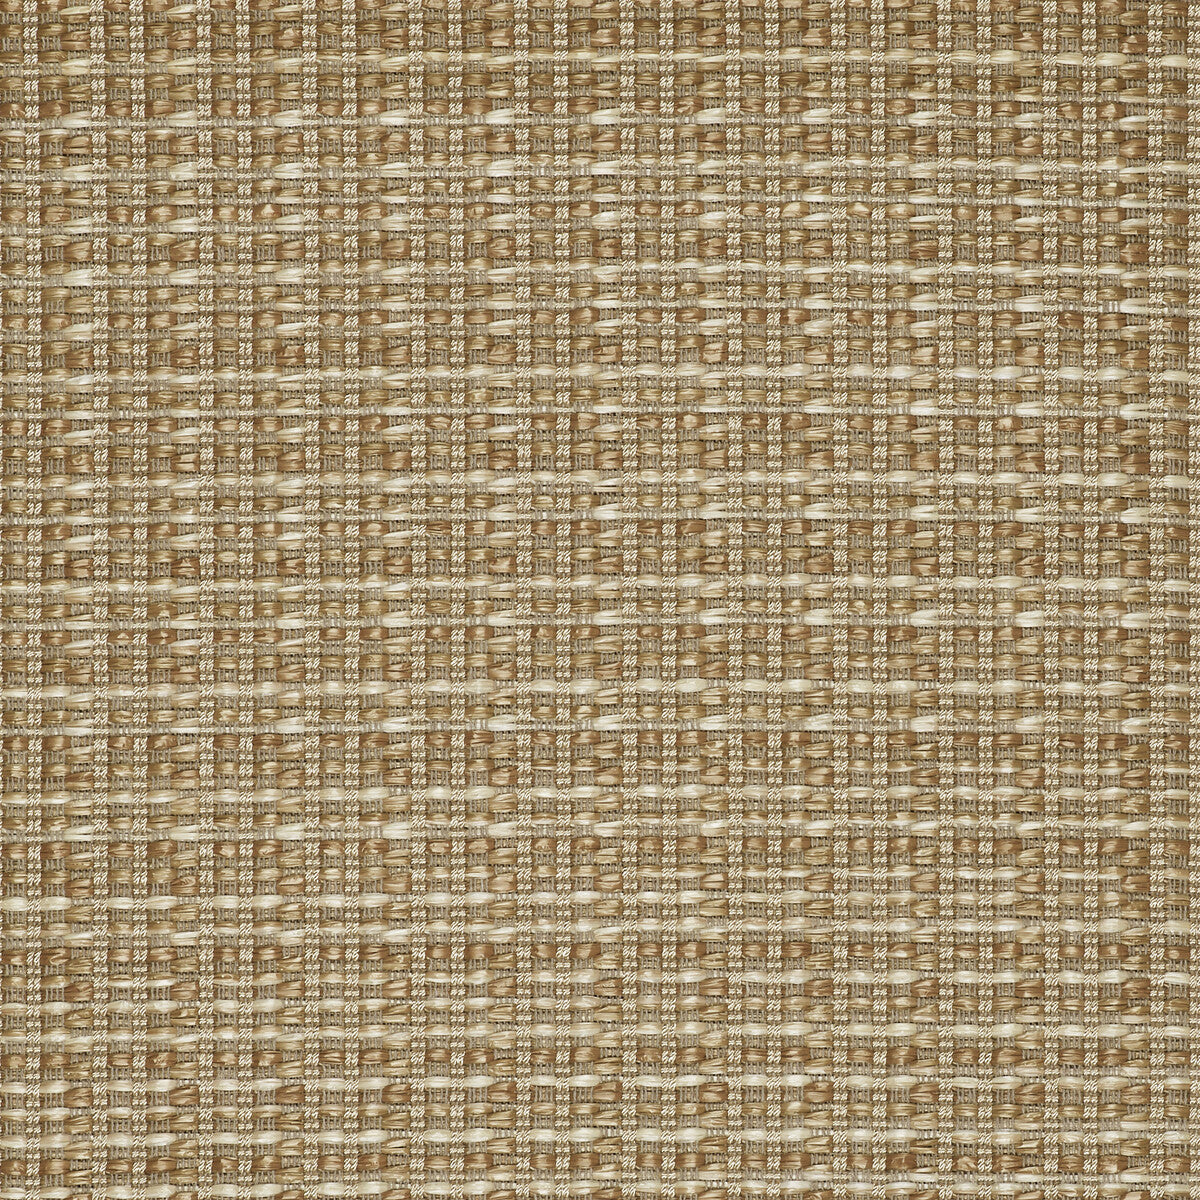 Mauregato fabric in paja color - pattern LCT1002.004.0 - by Gaston y Daniela in the Lorenzo Castillo V collection